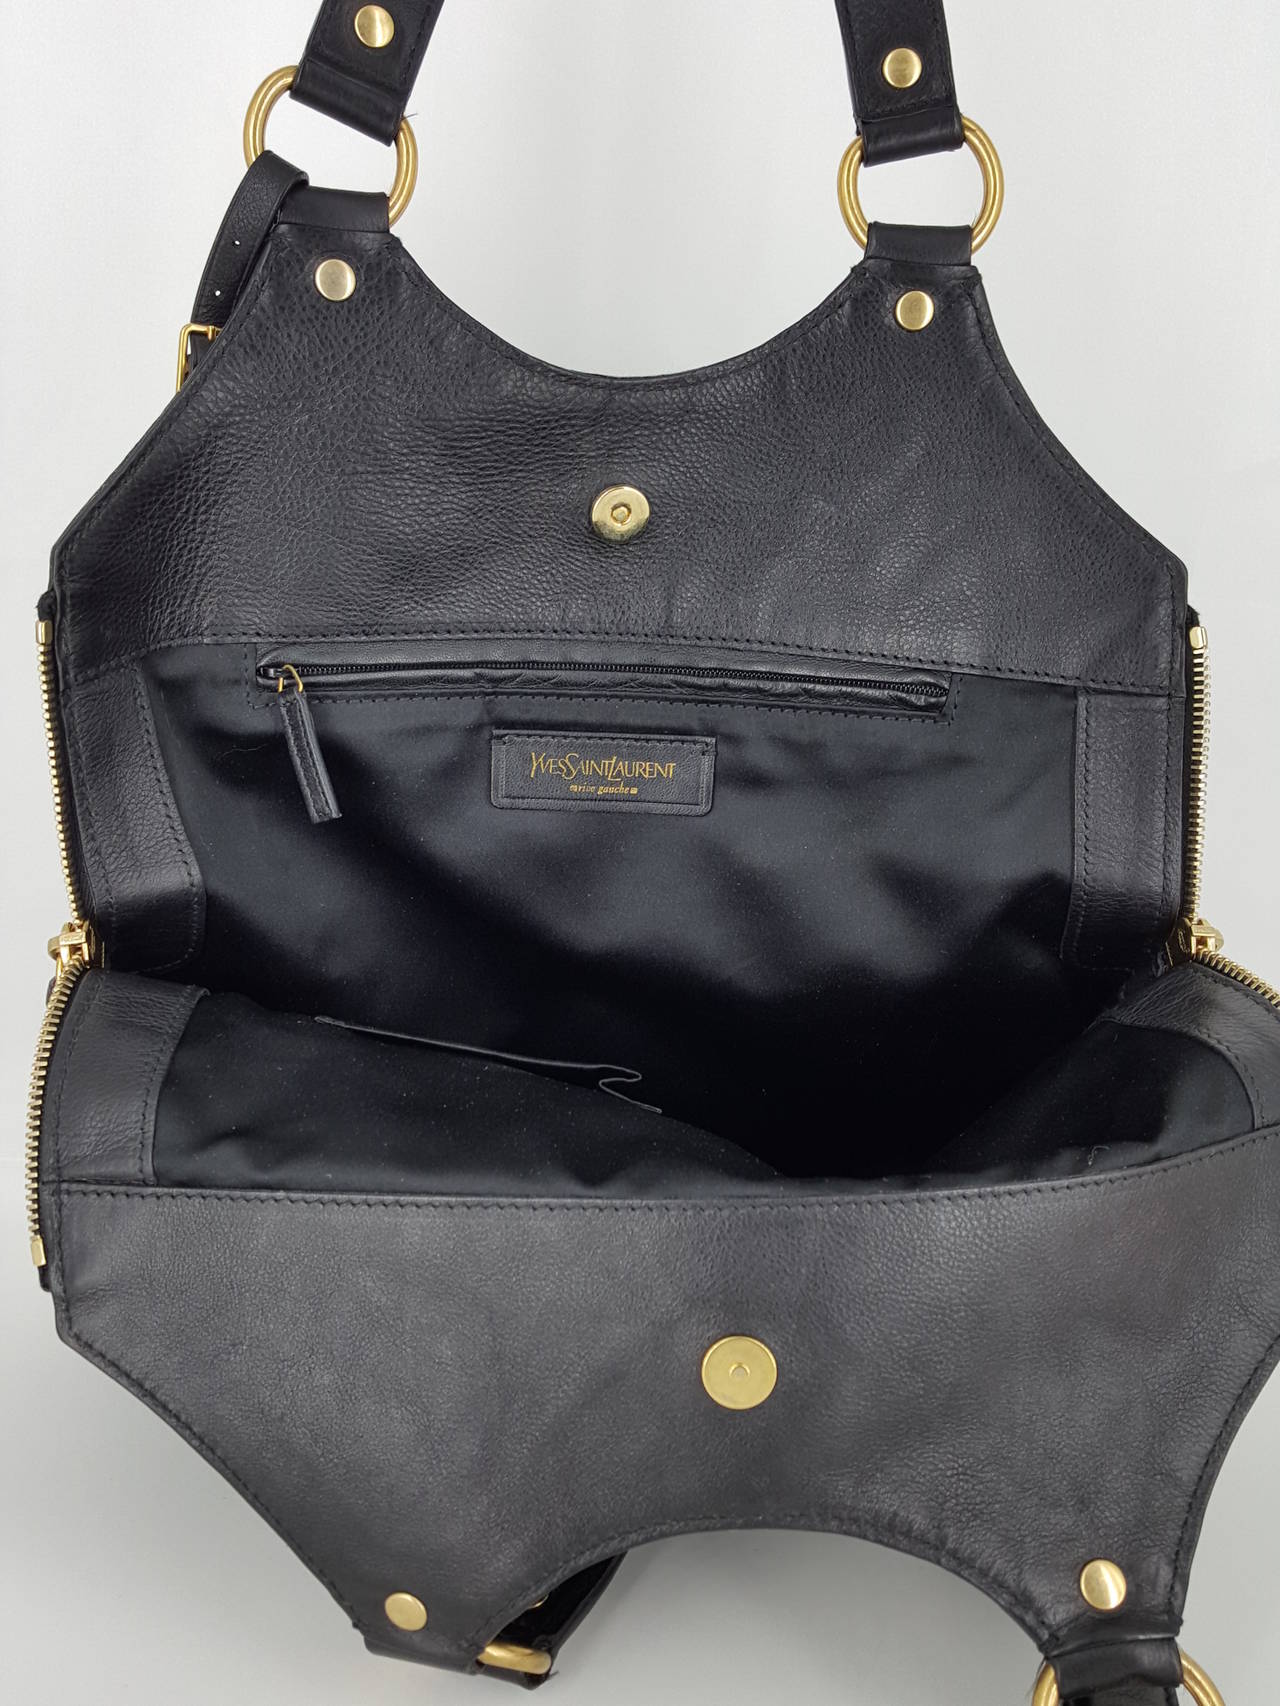 YSL Yves Saint Laurent Black Leather Tribute Bag. For Sale at 1stdibs  